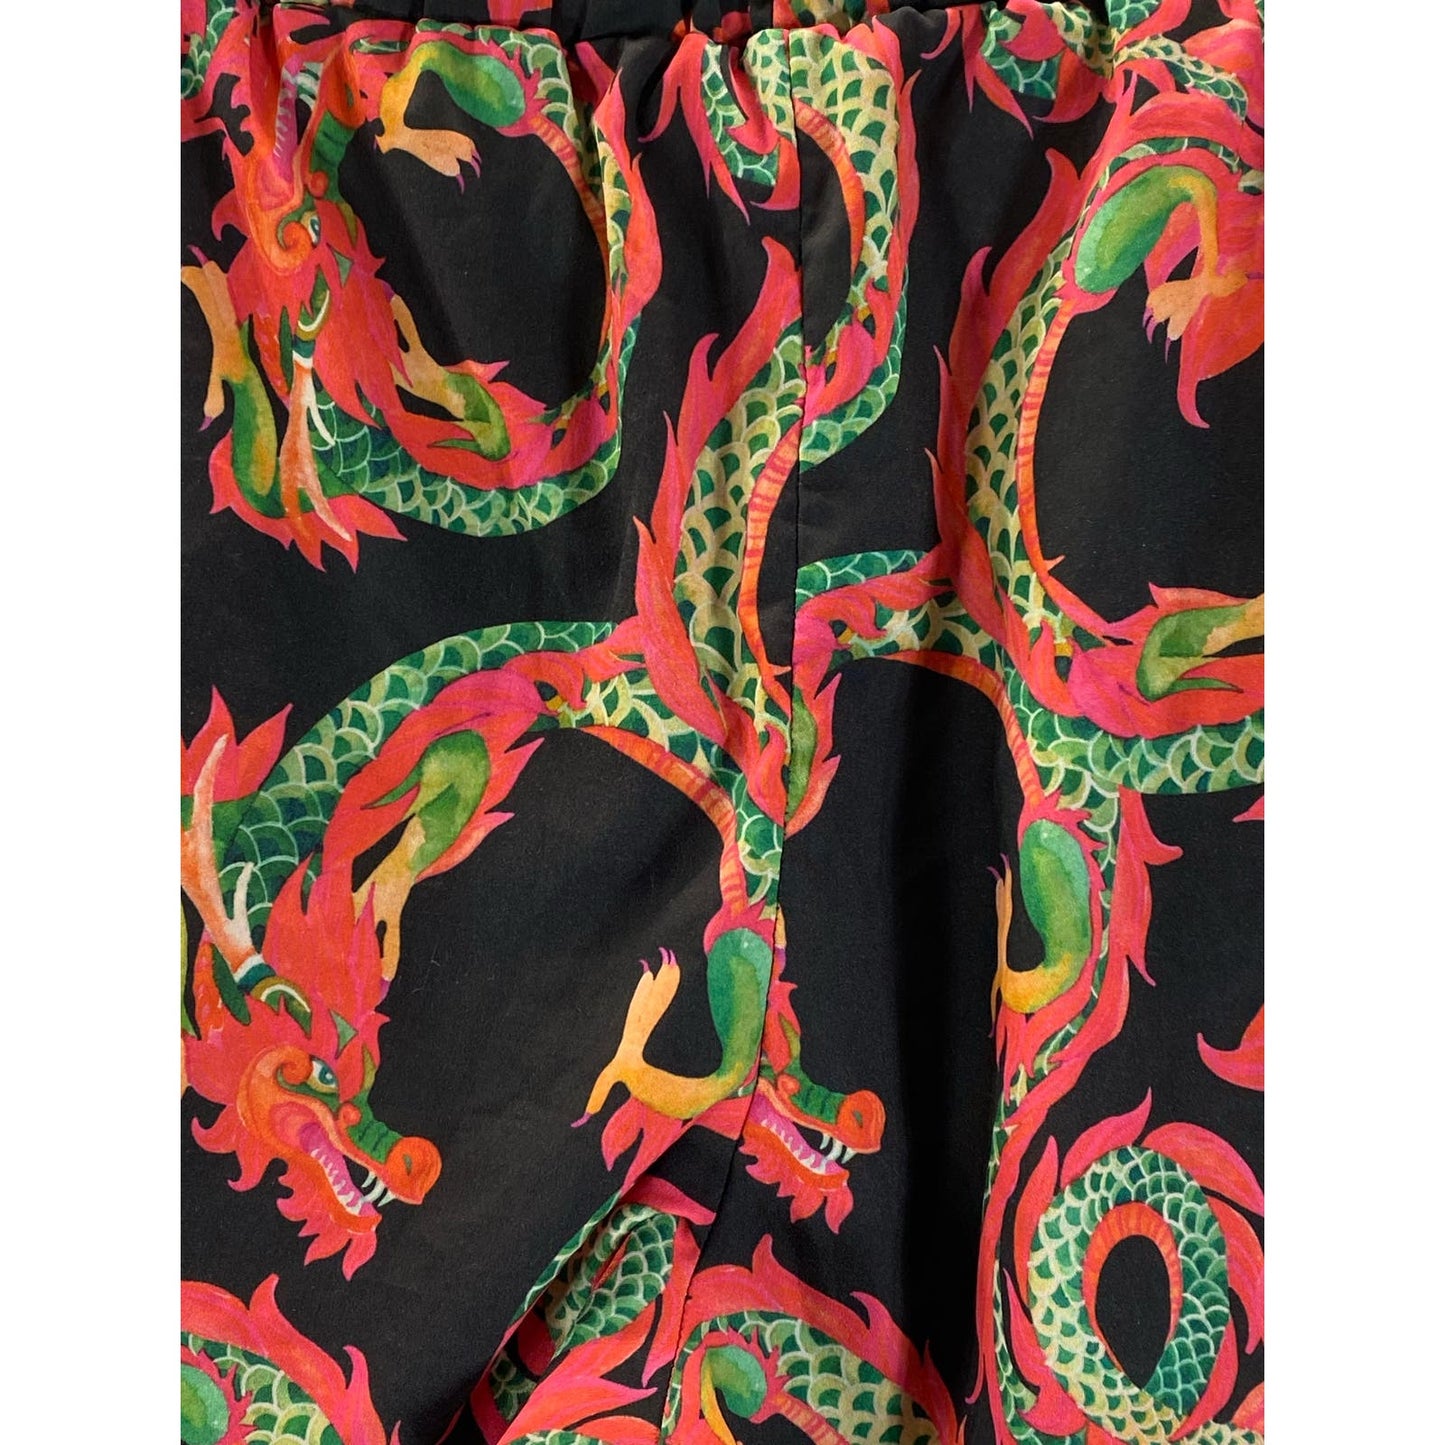 BOOHOO MAN Men's Red/Black Dragon Print Drawstring Pull-On Shorts SZ L